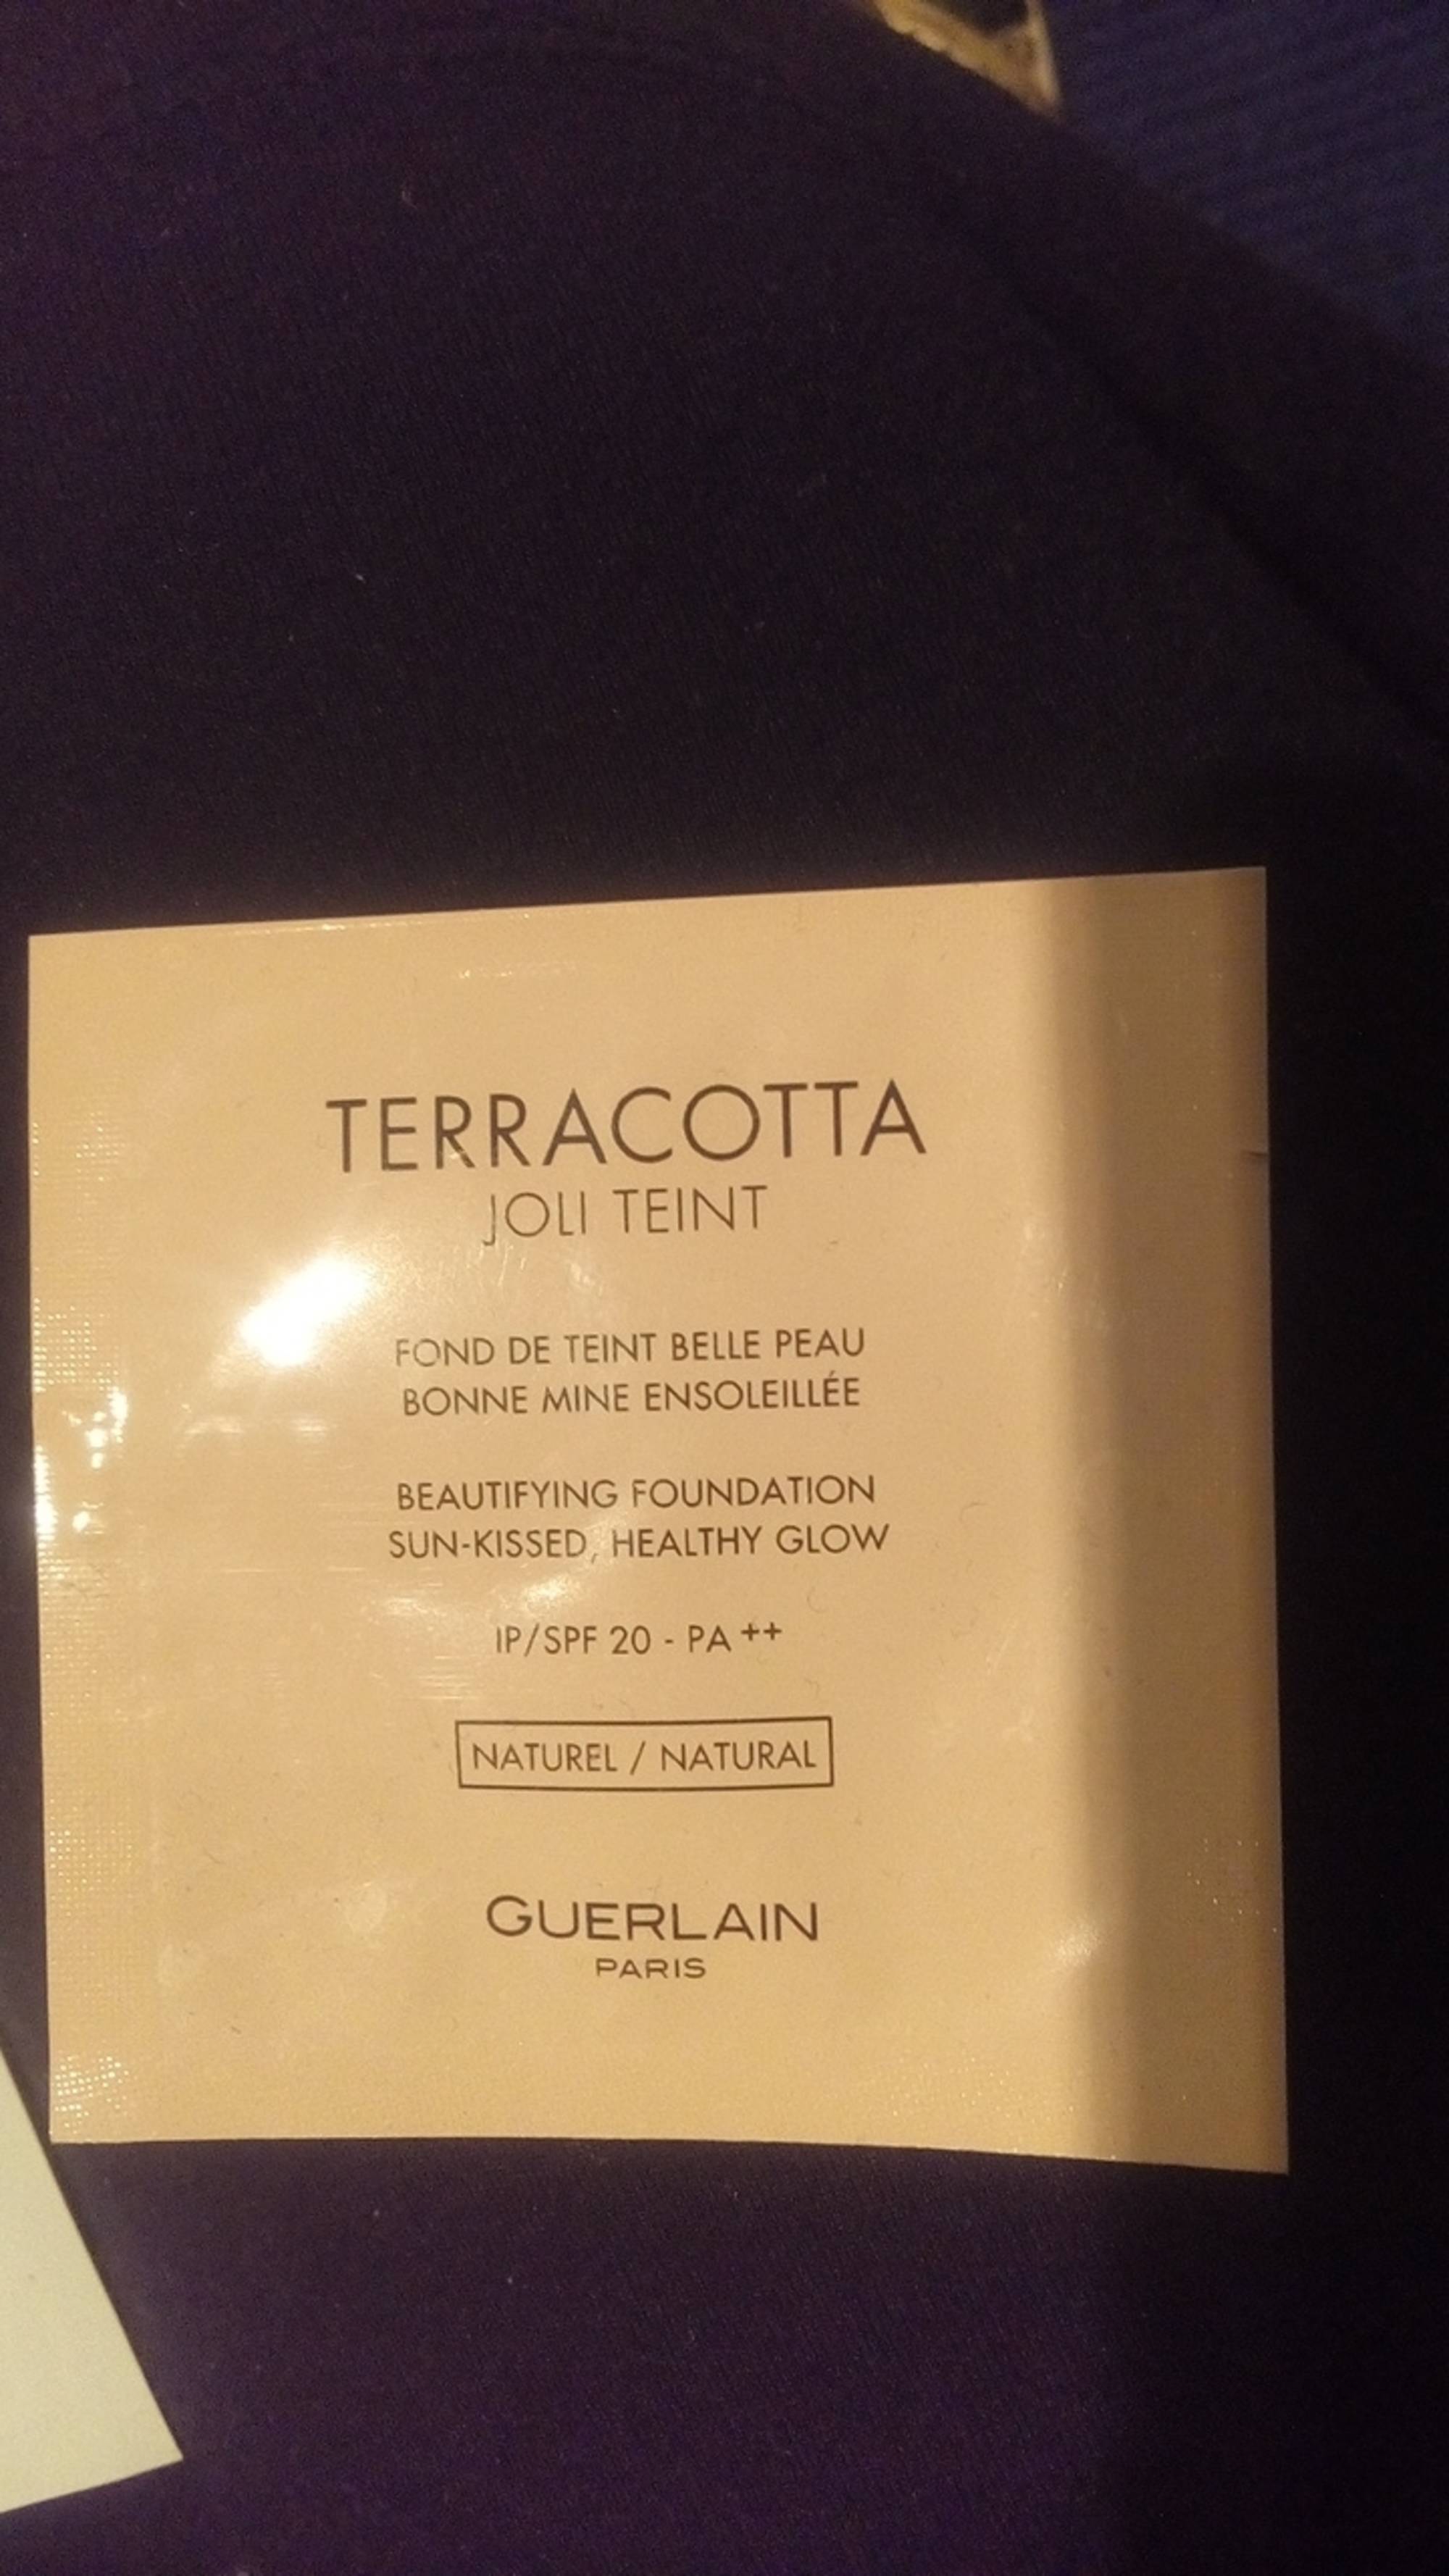 GUERLAIN - Terracotta Joli teint - Fond de teint naturel SPF 20